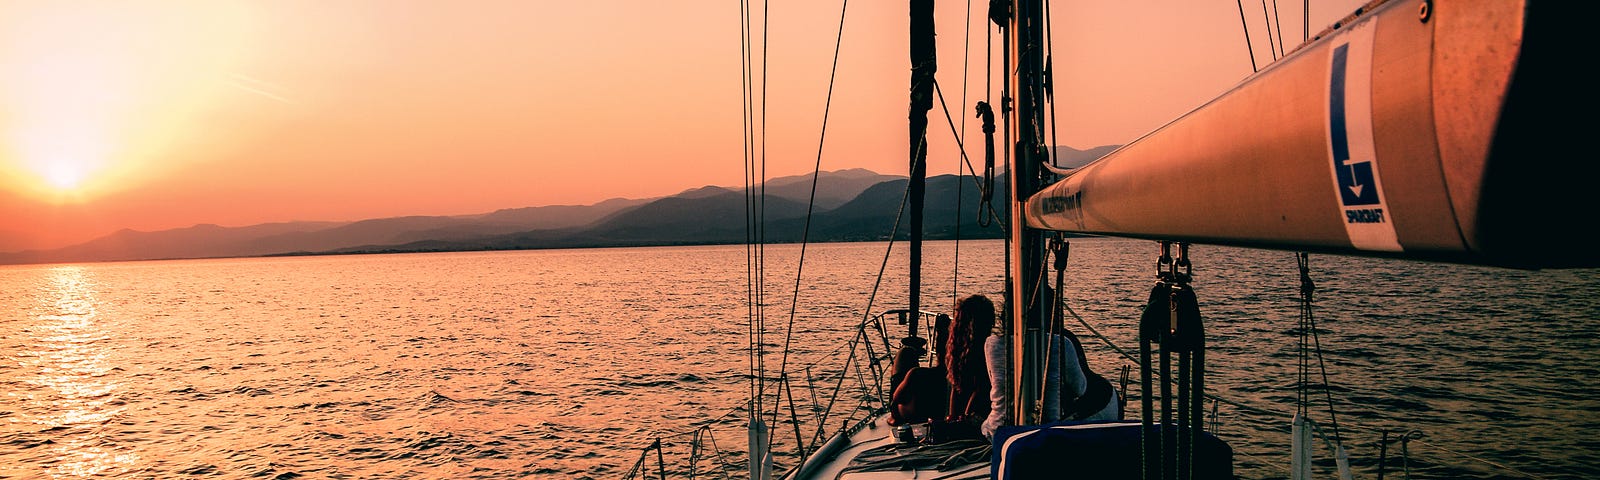 sailboat on ocean at sunset